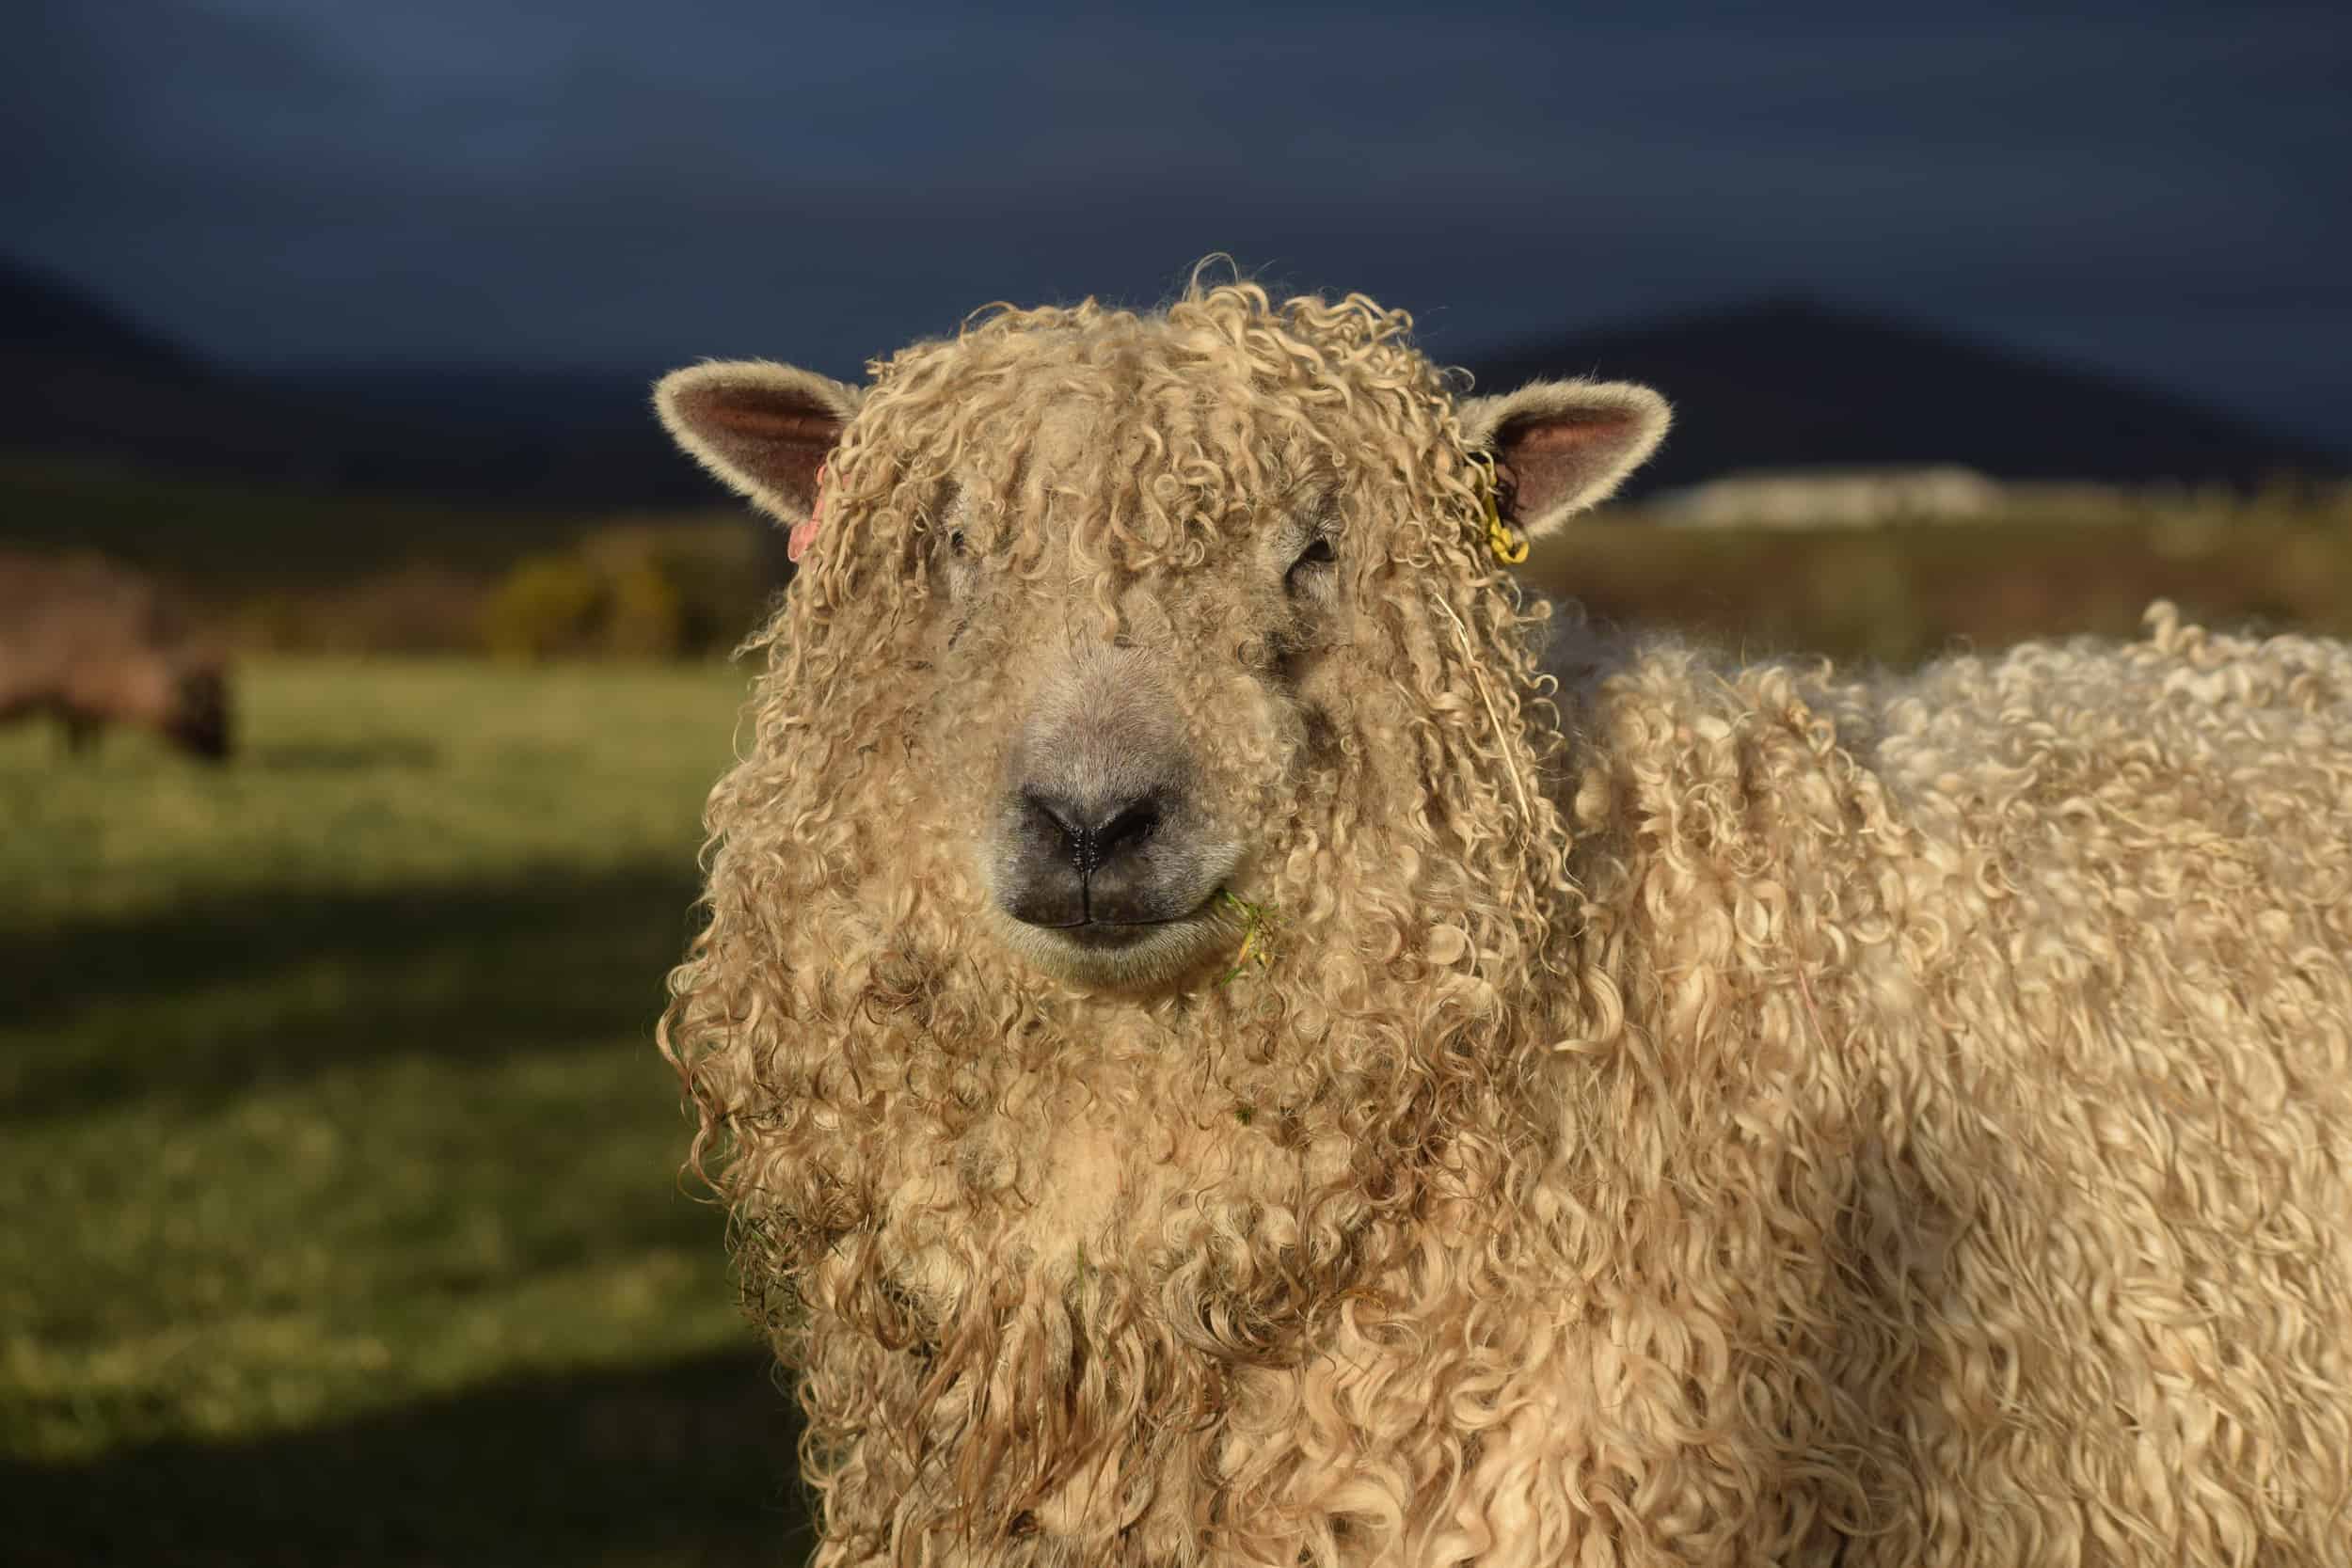 Alice patchwork sheep wensleydale cross greyface dartmoor gfd wool fiber